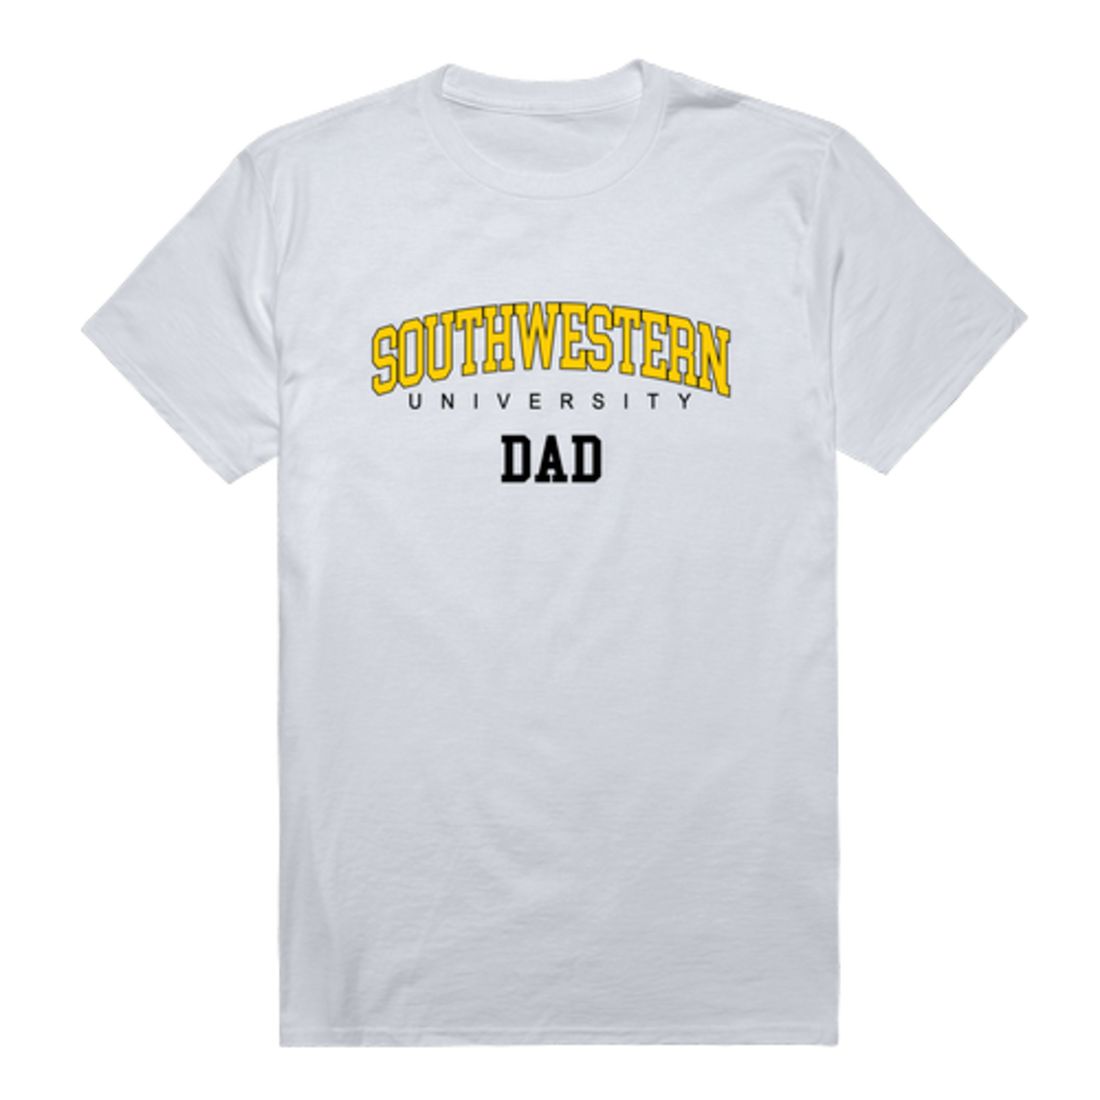 Southwestern University Pirates Dad T-Shirt